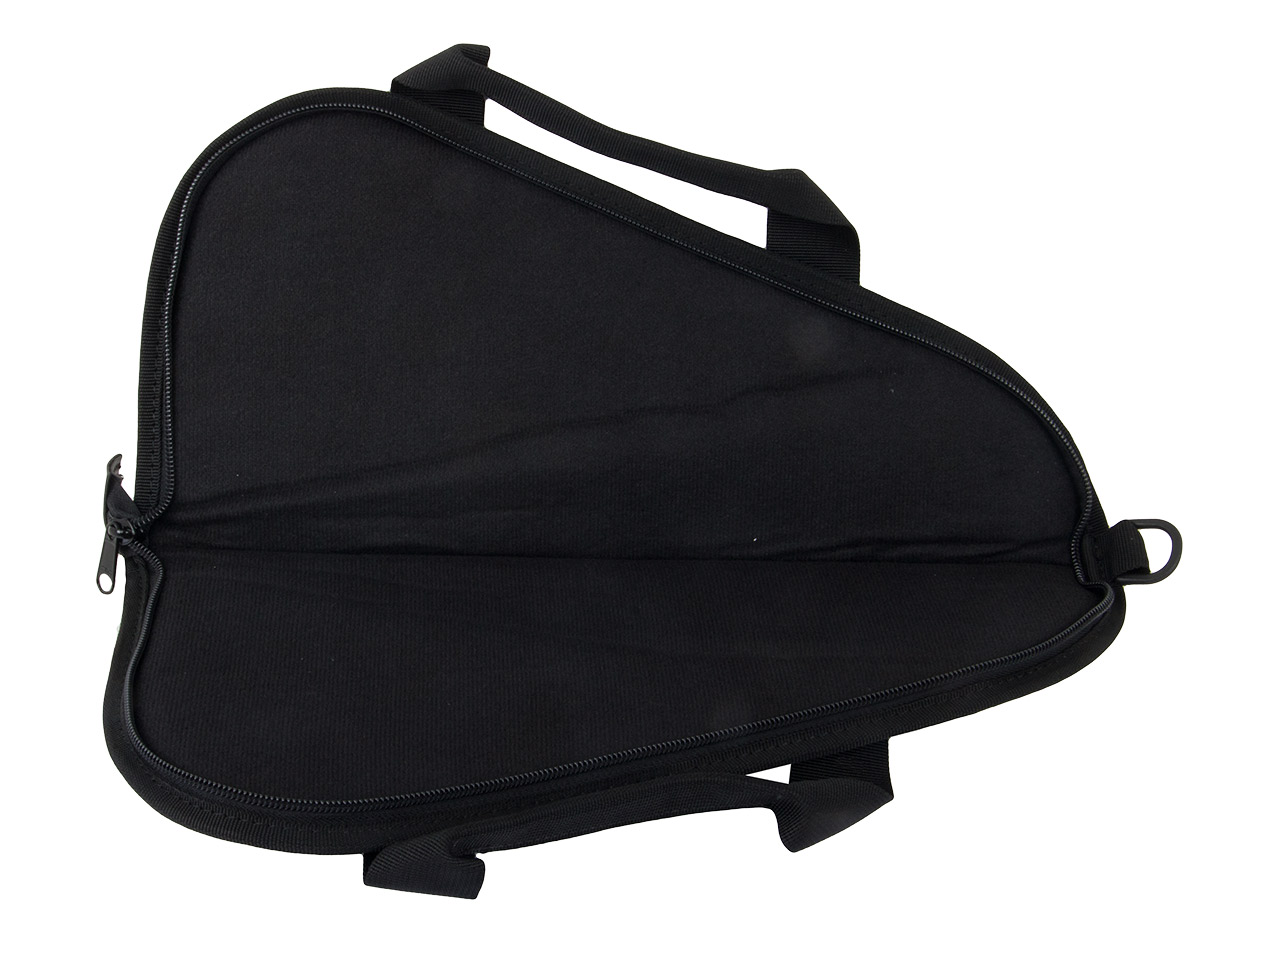 Pistolenfutteral Pistolentasche Transporttasche Akah-Tac 36 x 15 cm abschließbar Tragegriff schwarz